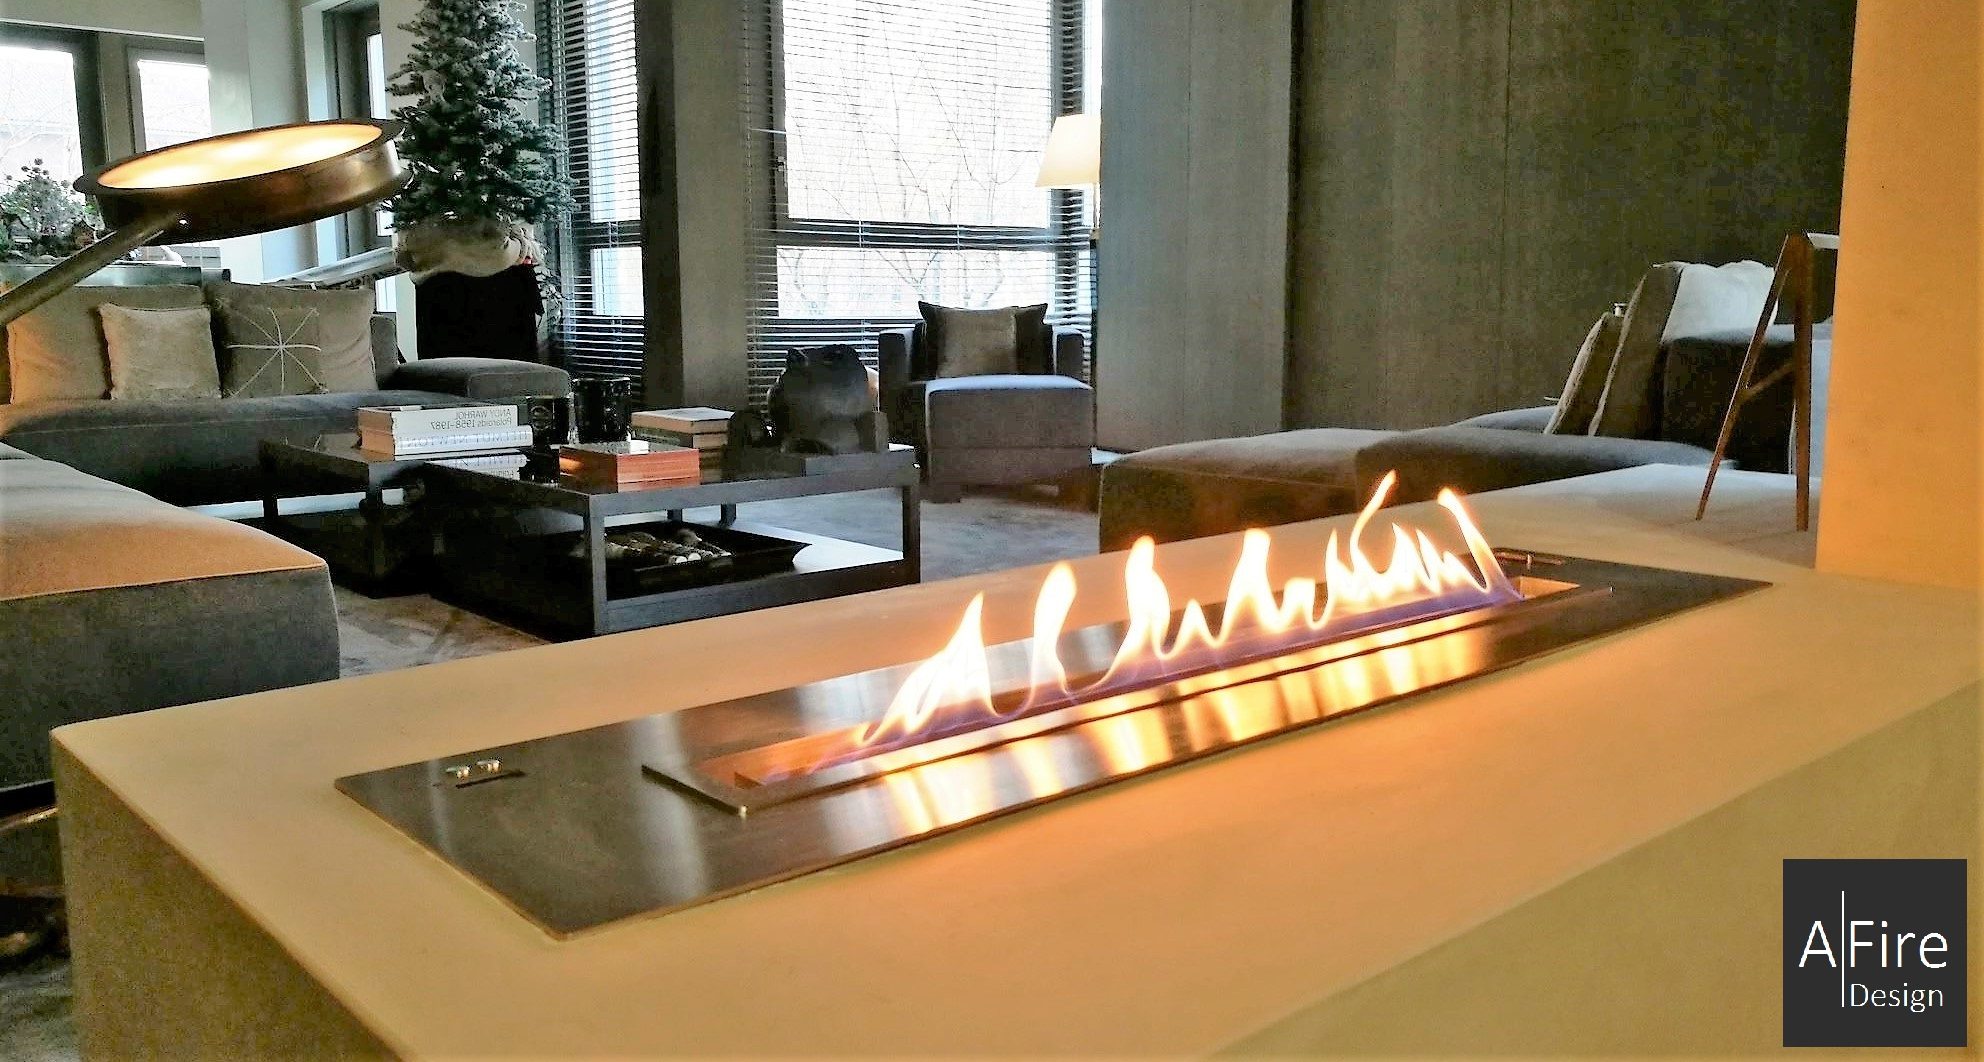 Fireplace for apartment: ethanol burner insert or water vapor fireplace?